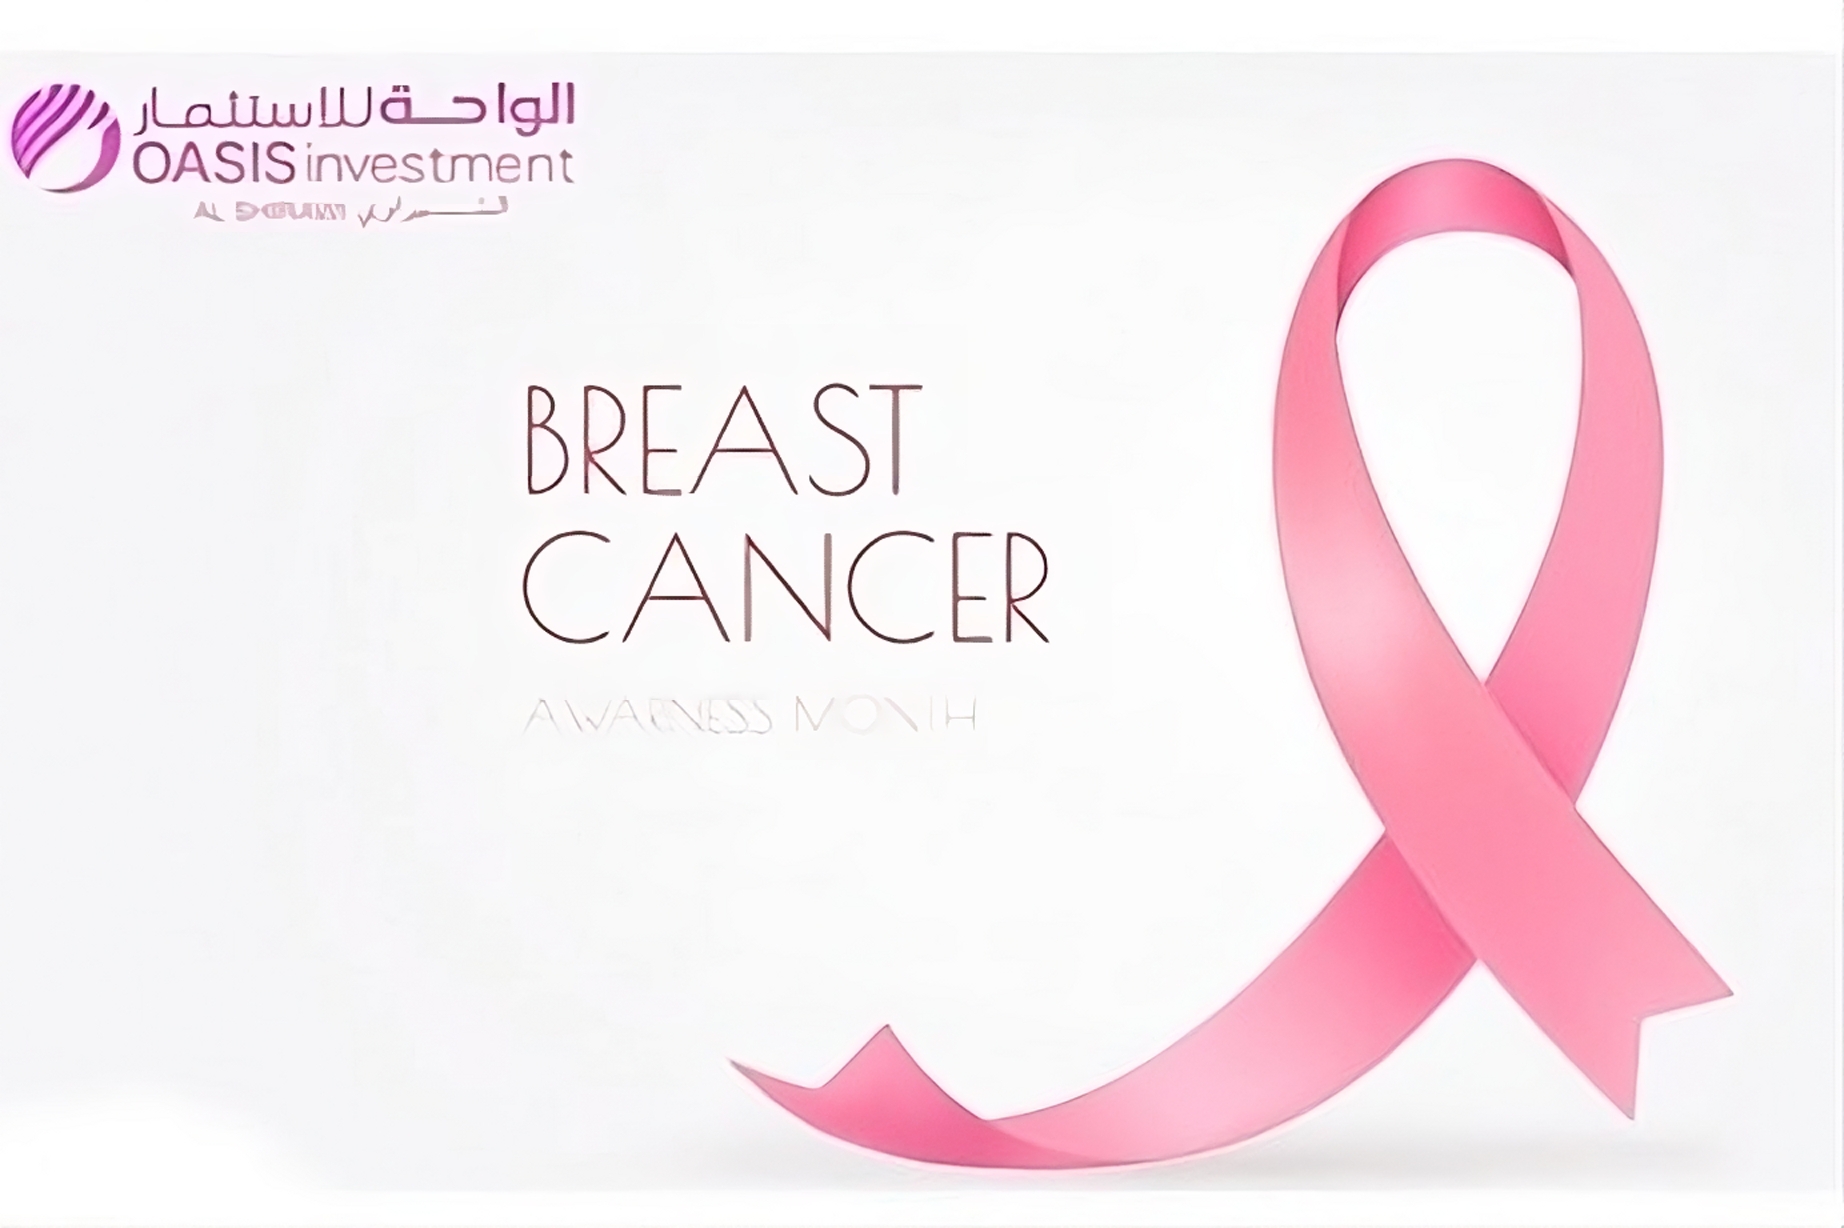 Celebrates Breast Cancer Awareness